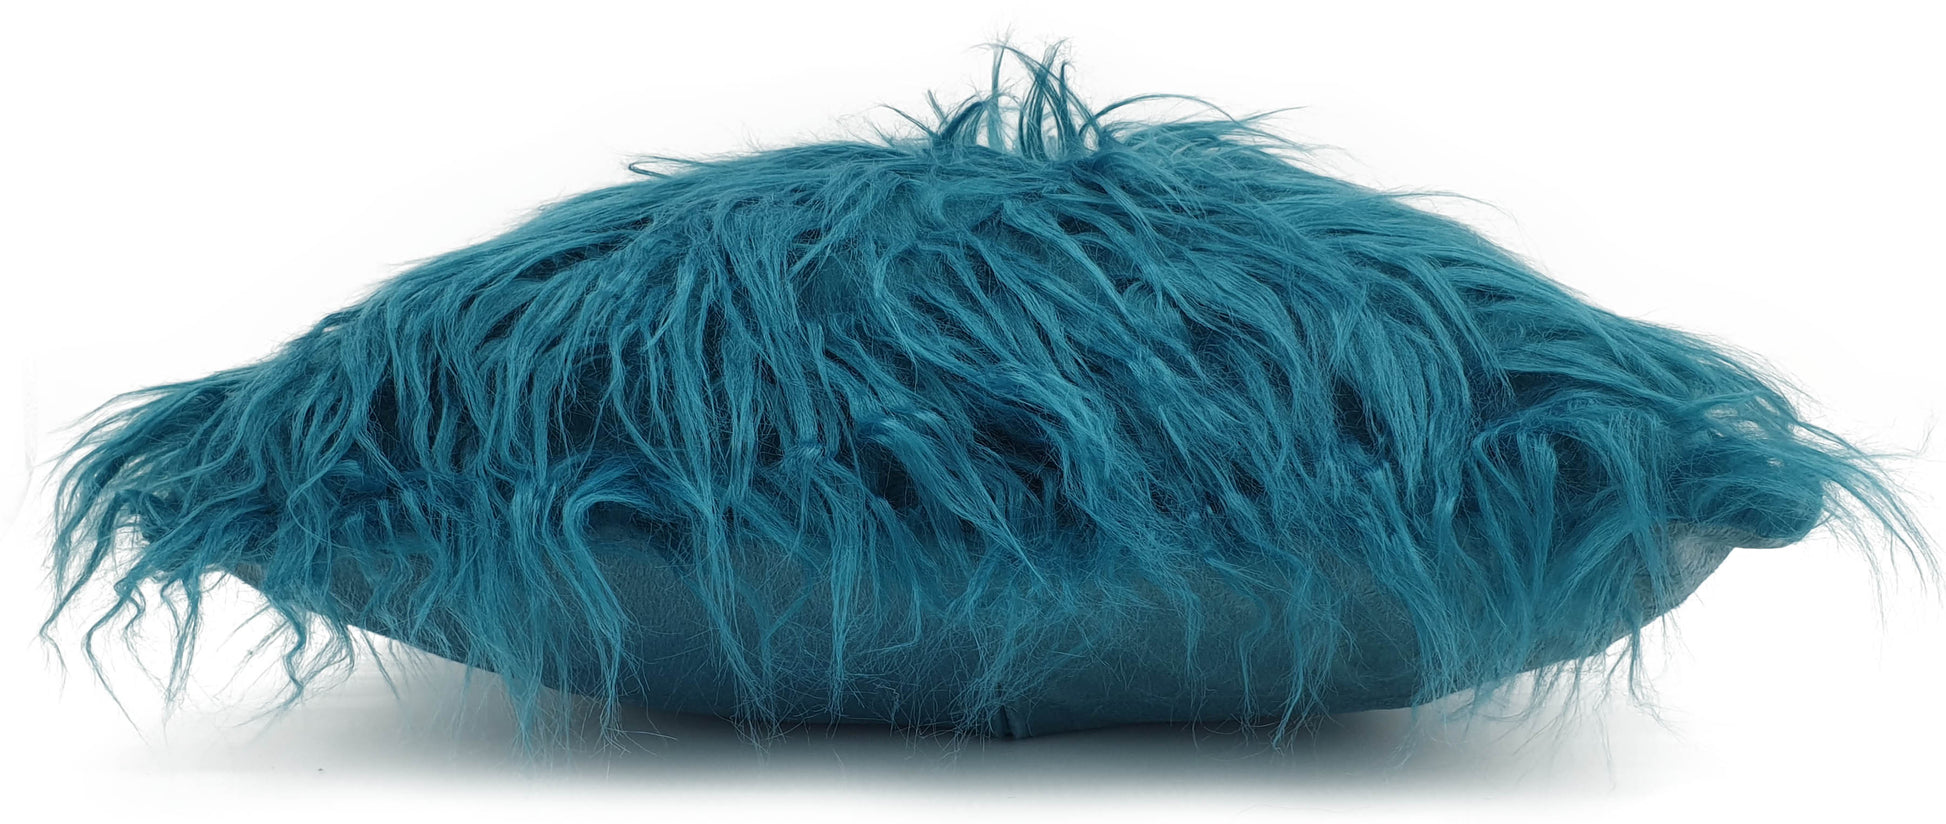 large cushion cover or cushions long Shaggy faux fur cushions TEAL BLUE side view